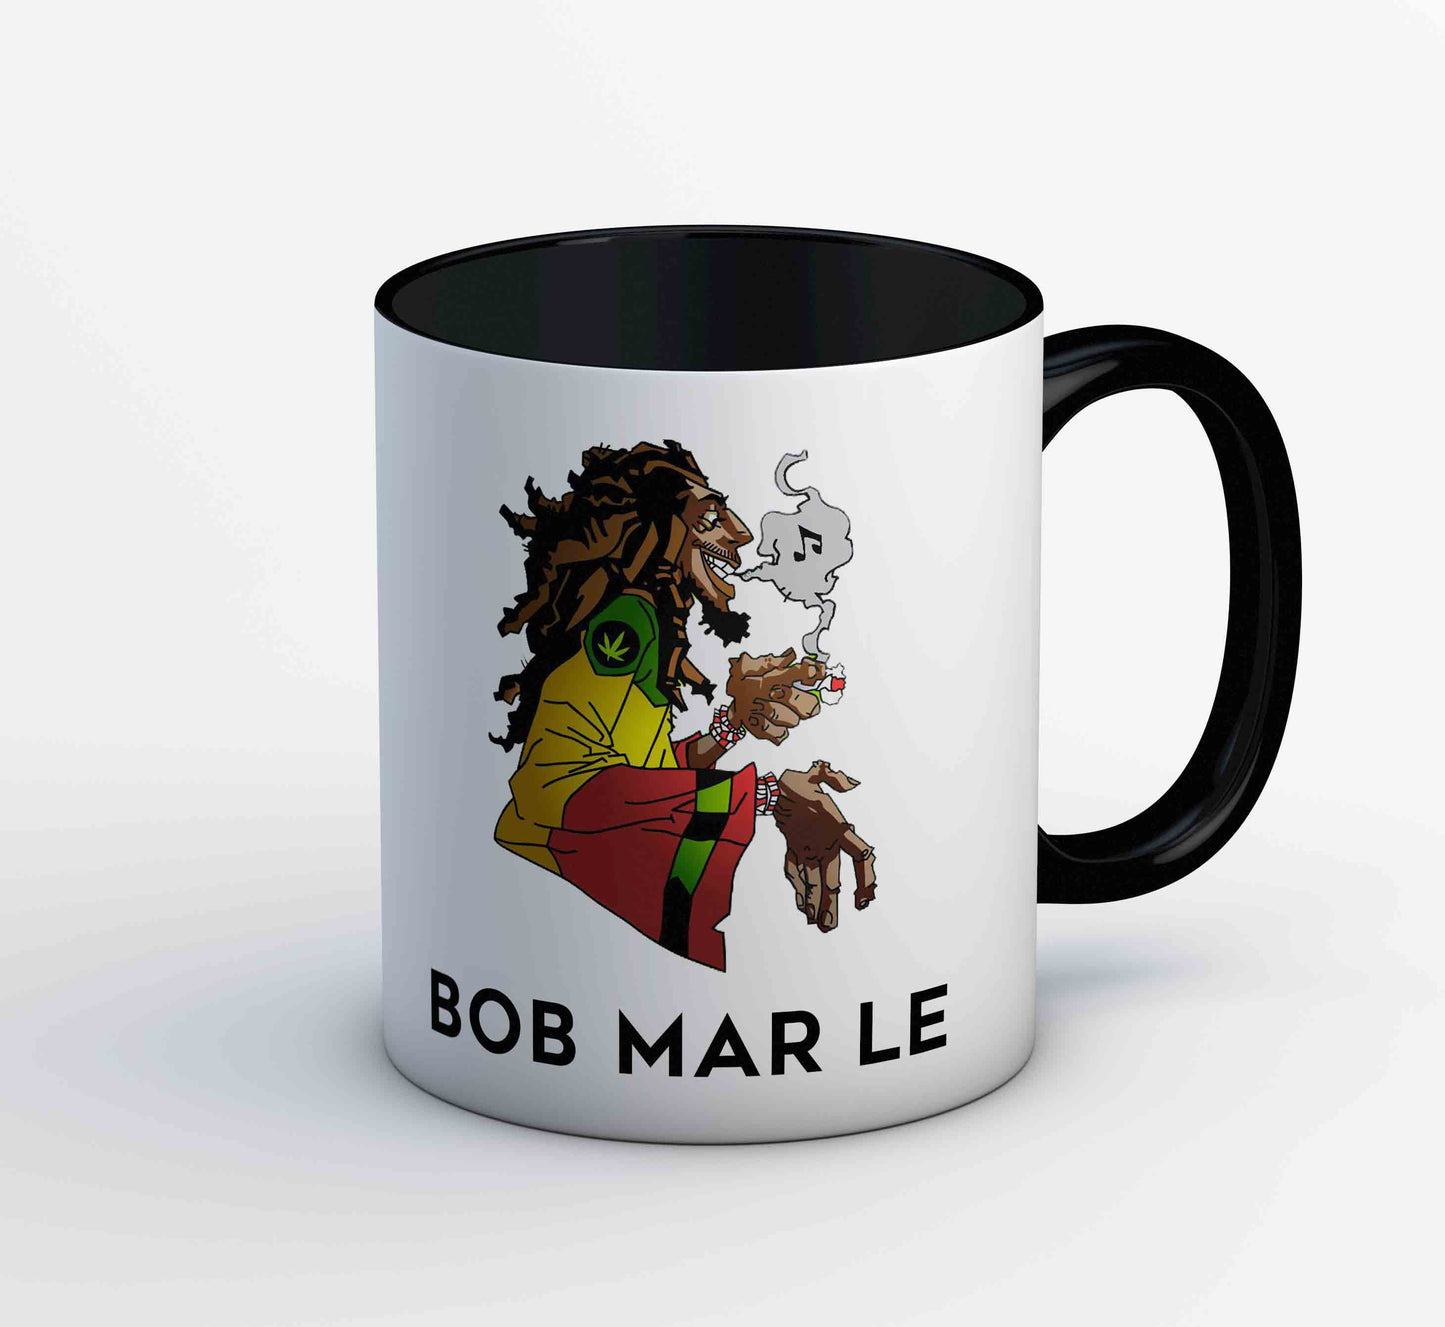 bob marley mar le mug coffee ceramic music band buy online india the banyan tee tbt men women girls boys unisex